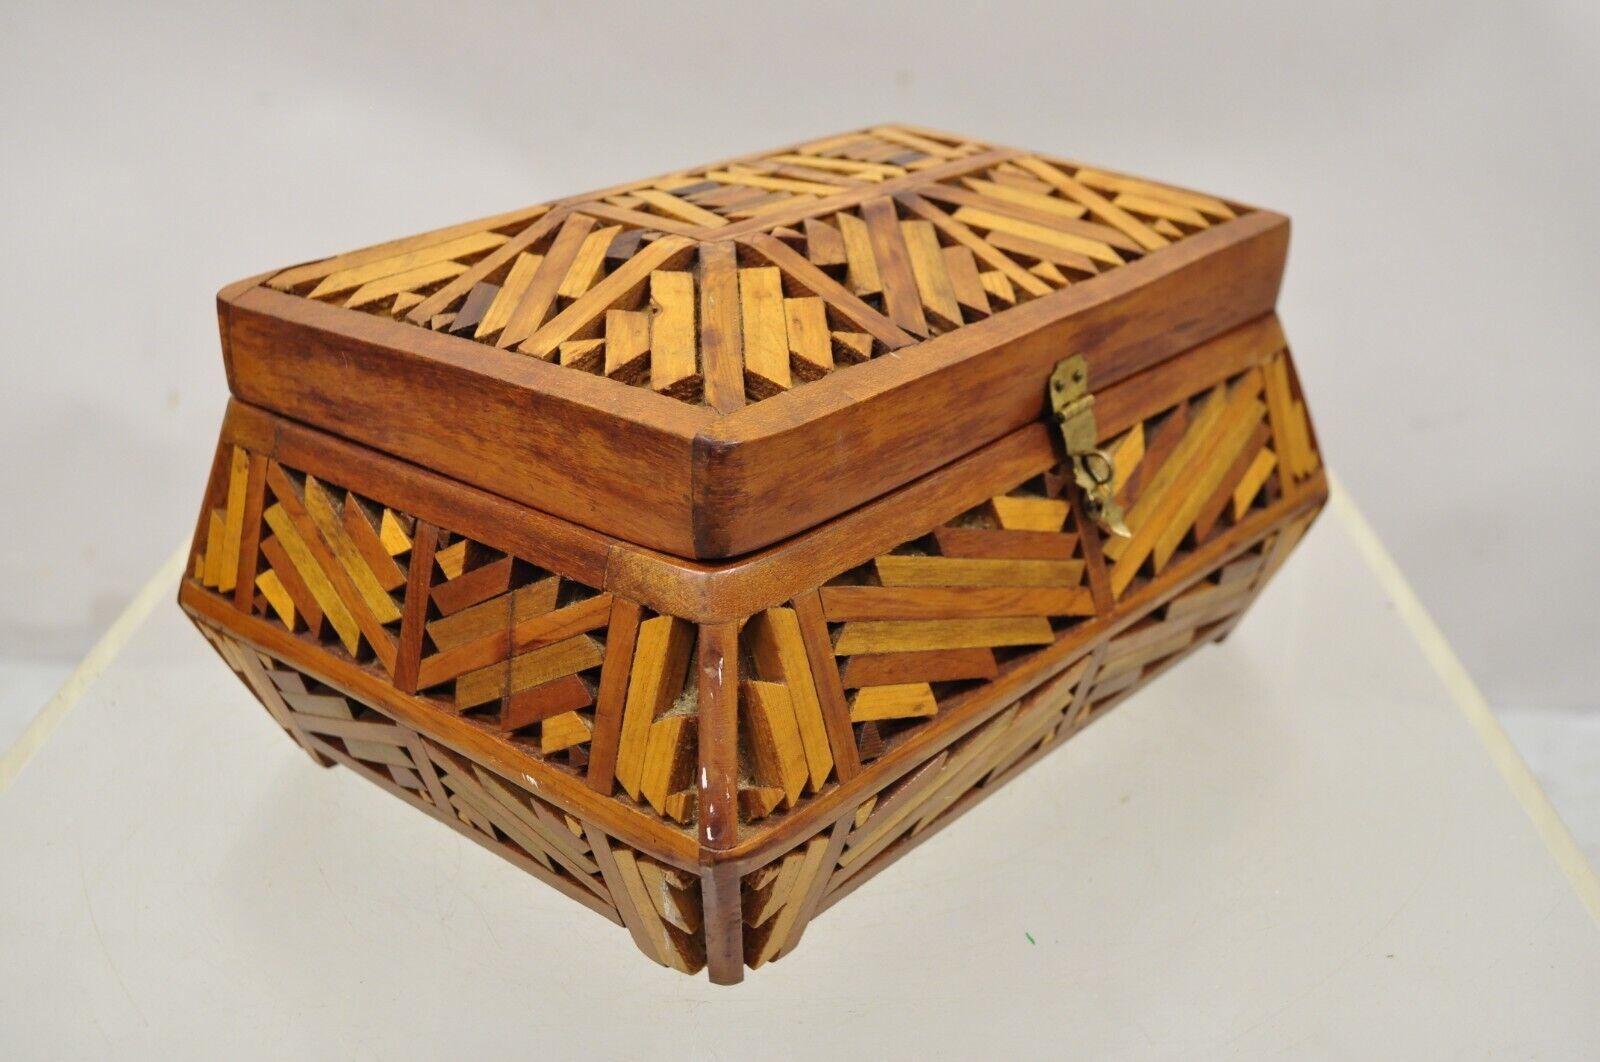 Vintage Wood Arts & Crafts tramp art folk art jewelry box trinket box. Item features mirror to the interior lid, solid wood construction, beautiful wood grain, very nice vintage item. Circa Mid 20th century. Measurements: 6